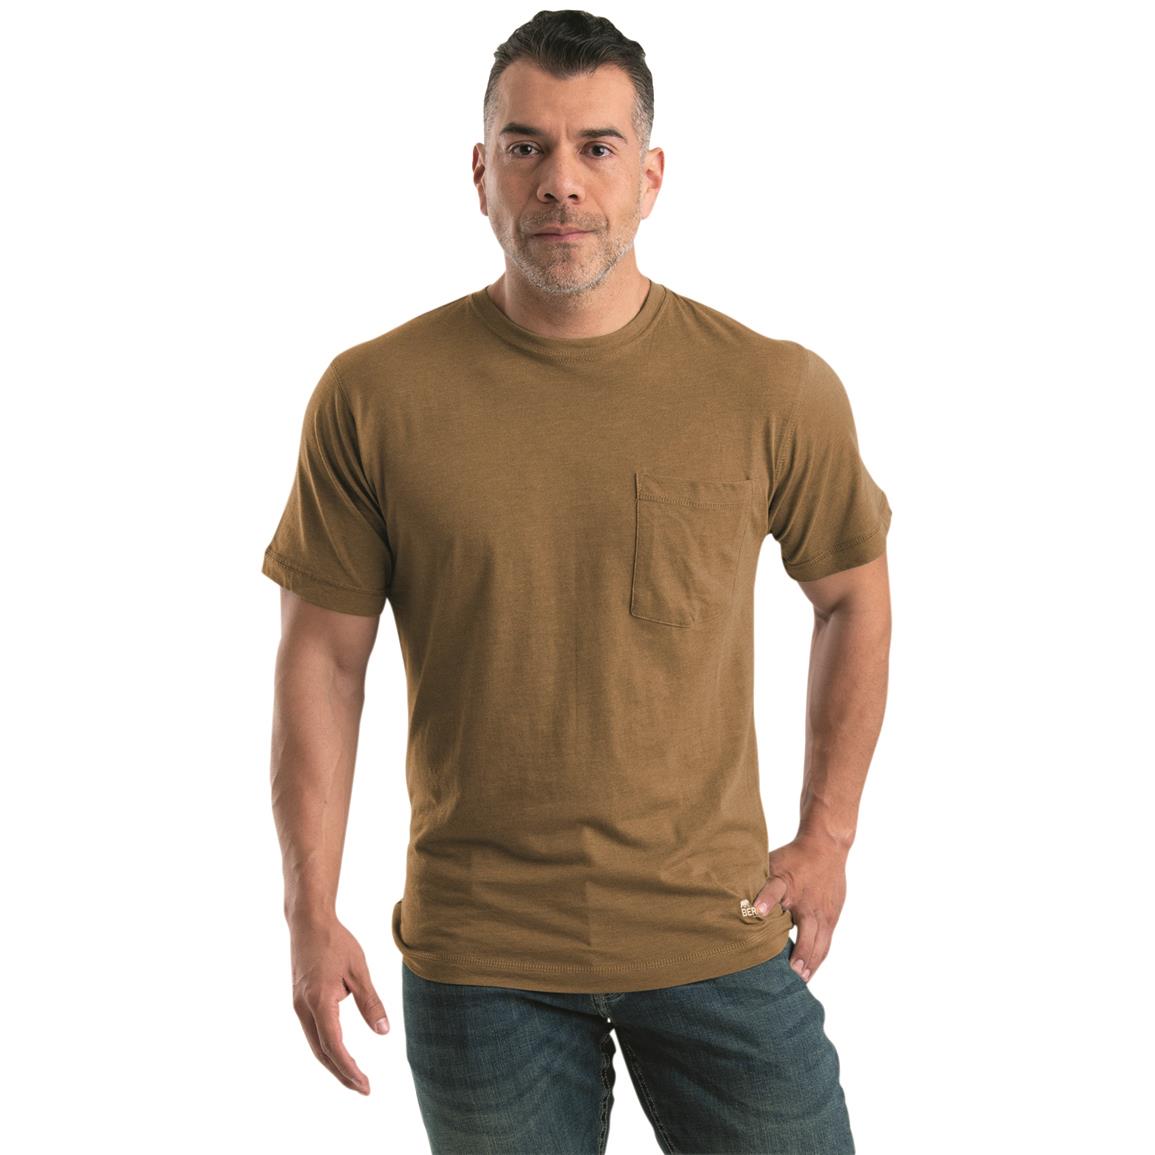 Berne Men's Performance Short Sleeve Pocket T-Shirt, Brown